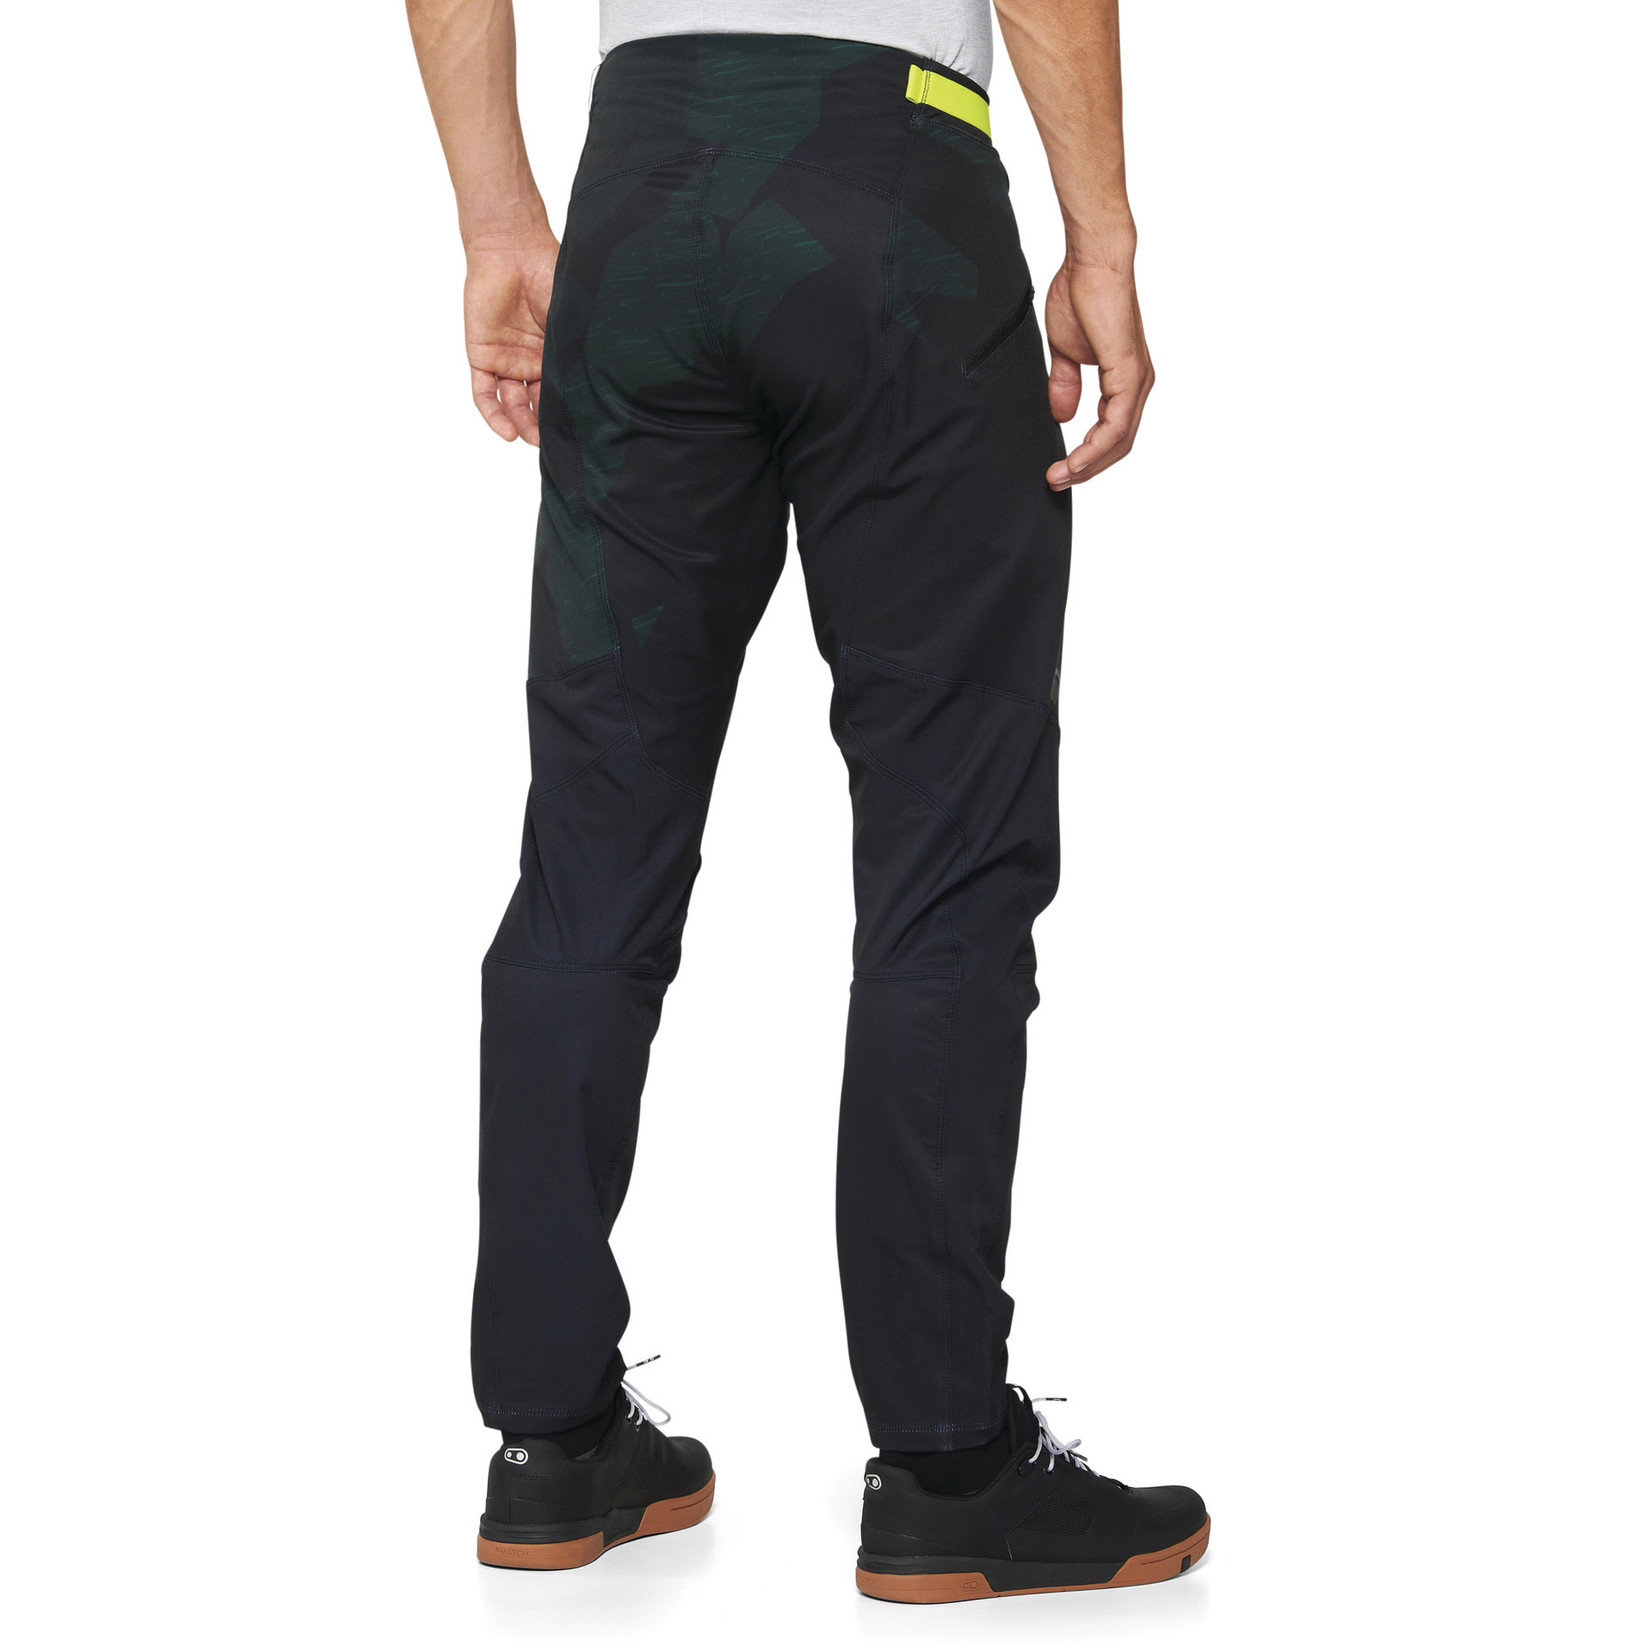 100 Percent 100% Airmatic LE Pants - Black Camo - Size 28